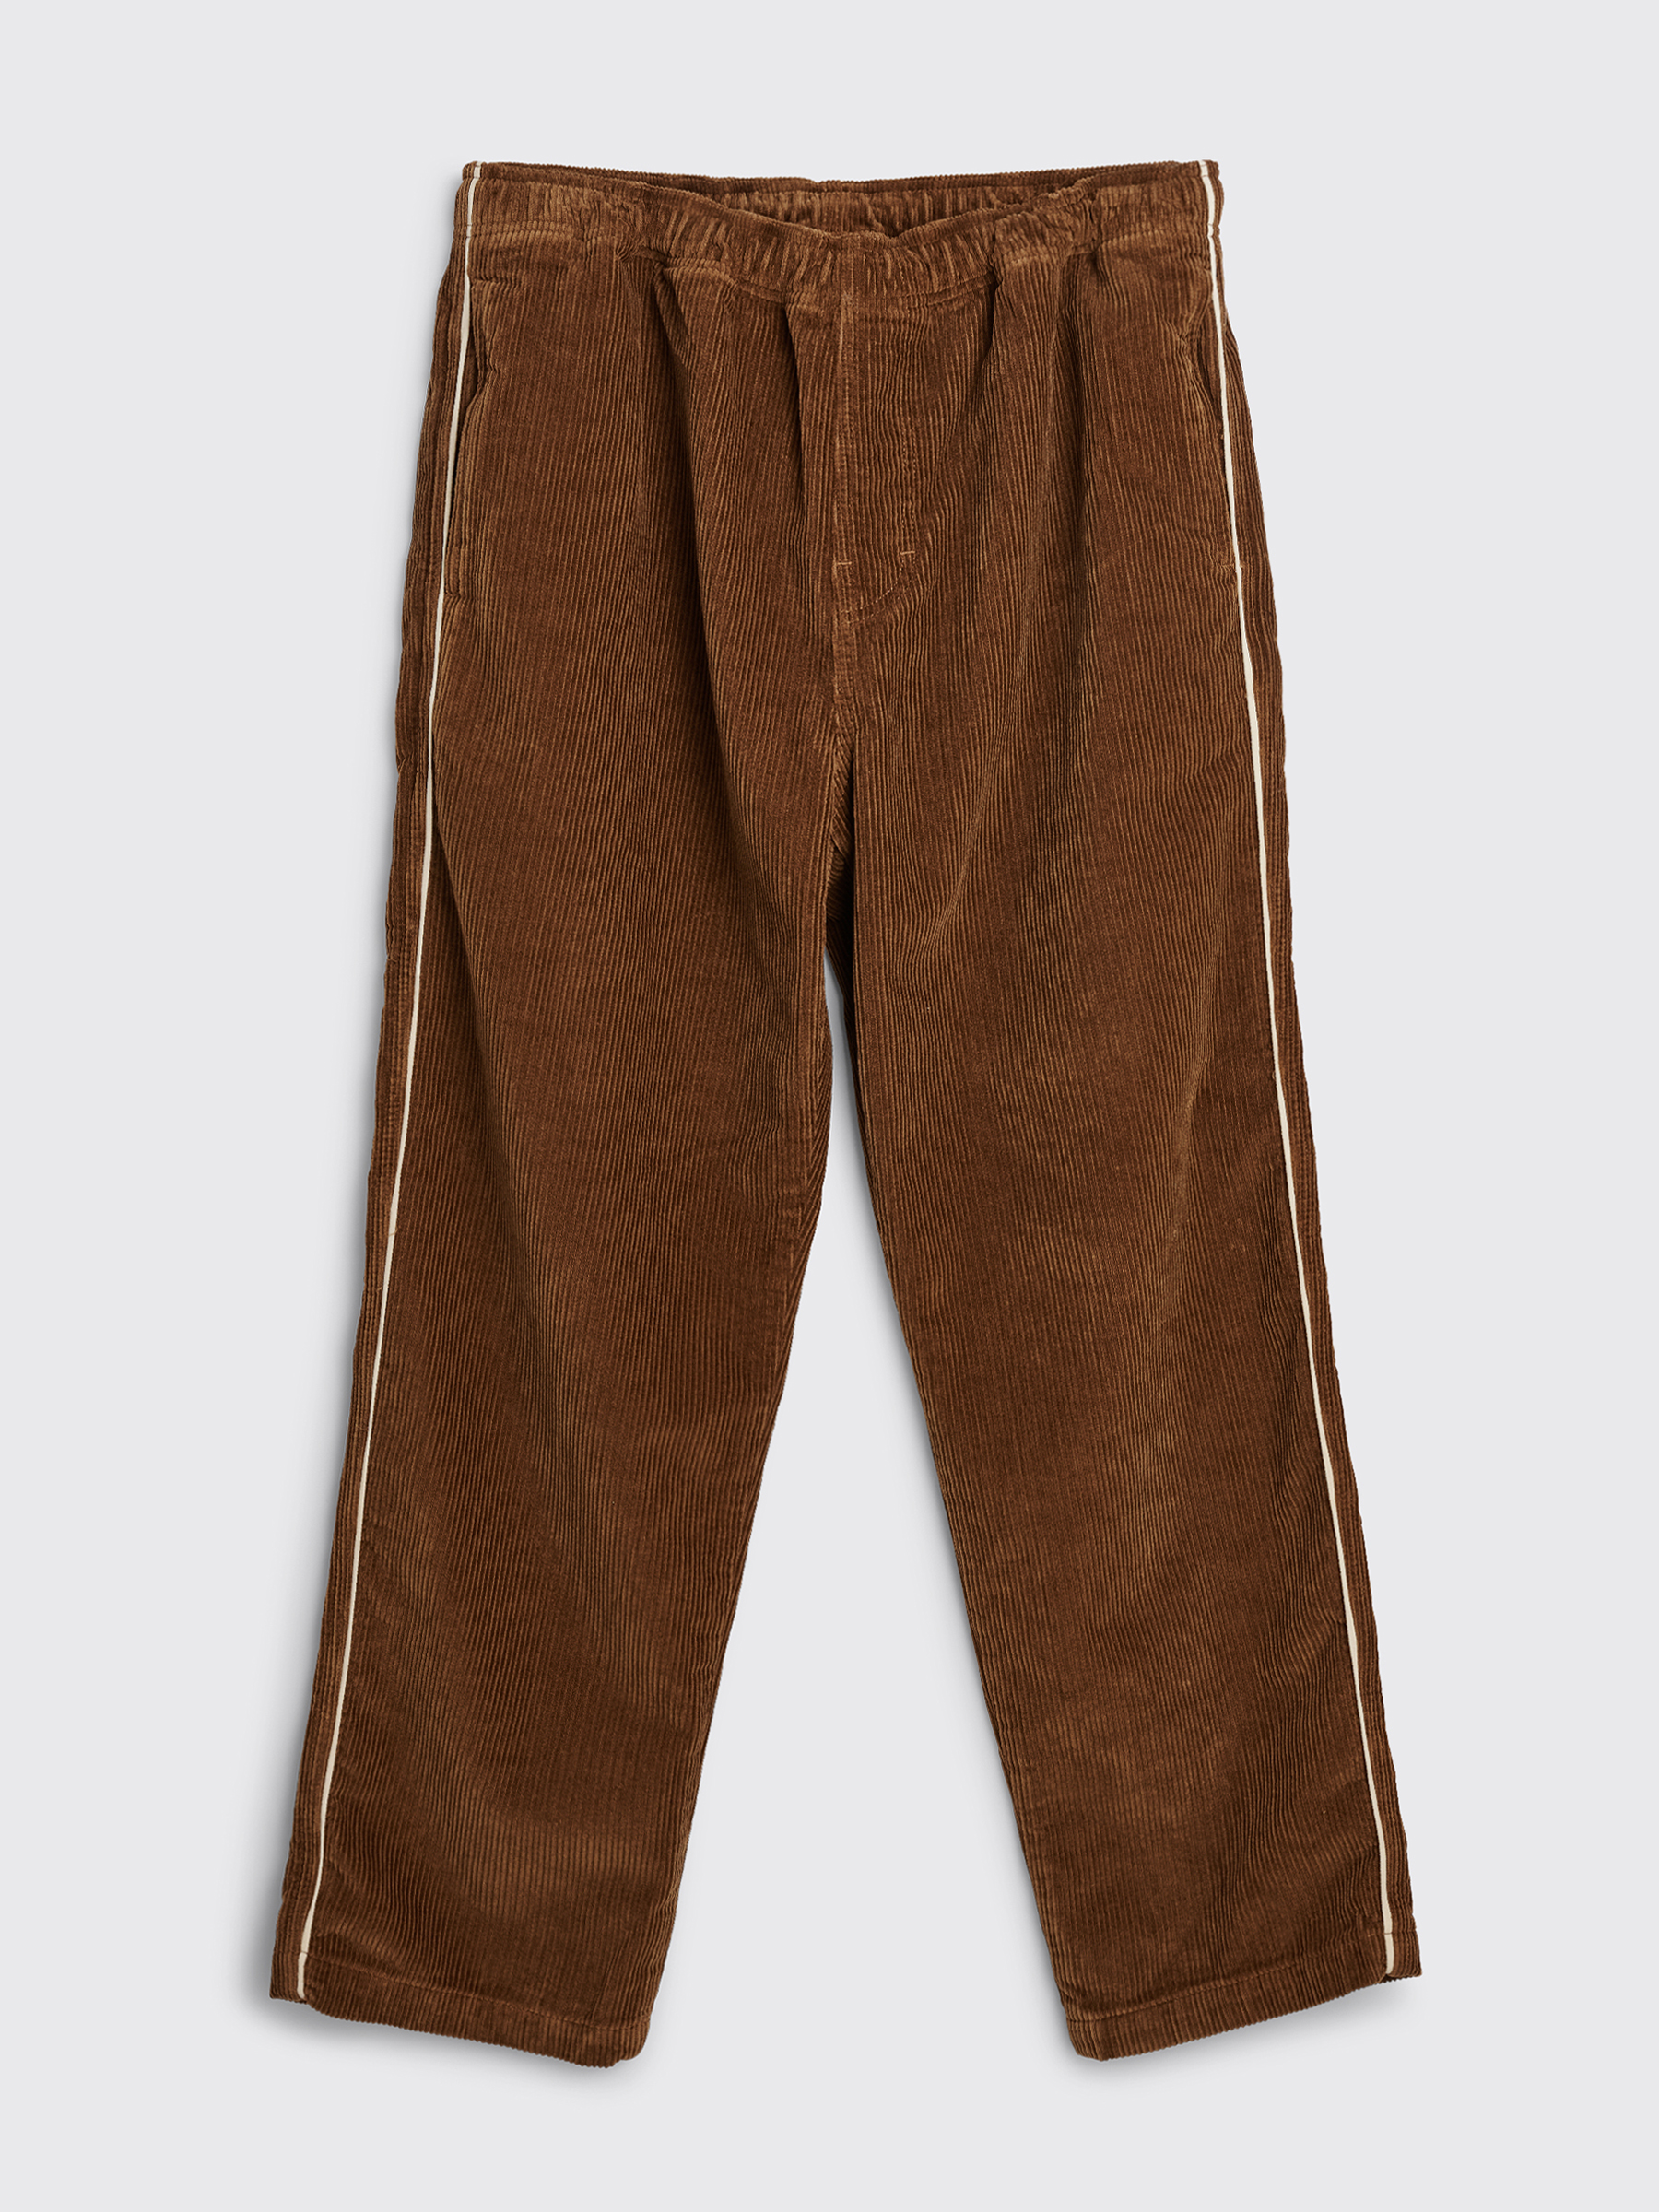 CCS Original Relaxed Corduroy Pants - Brown